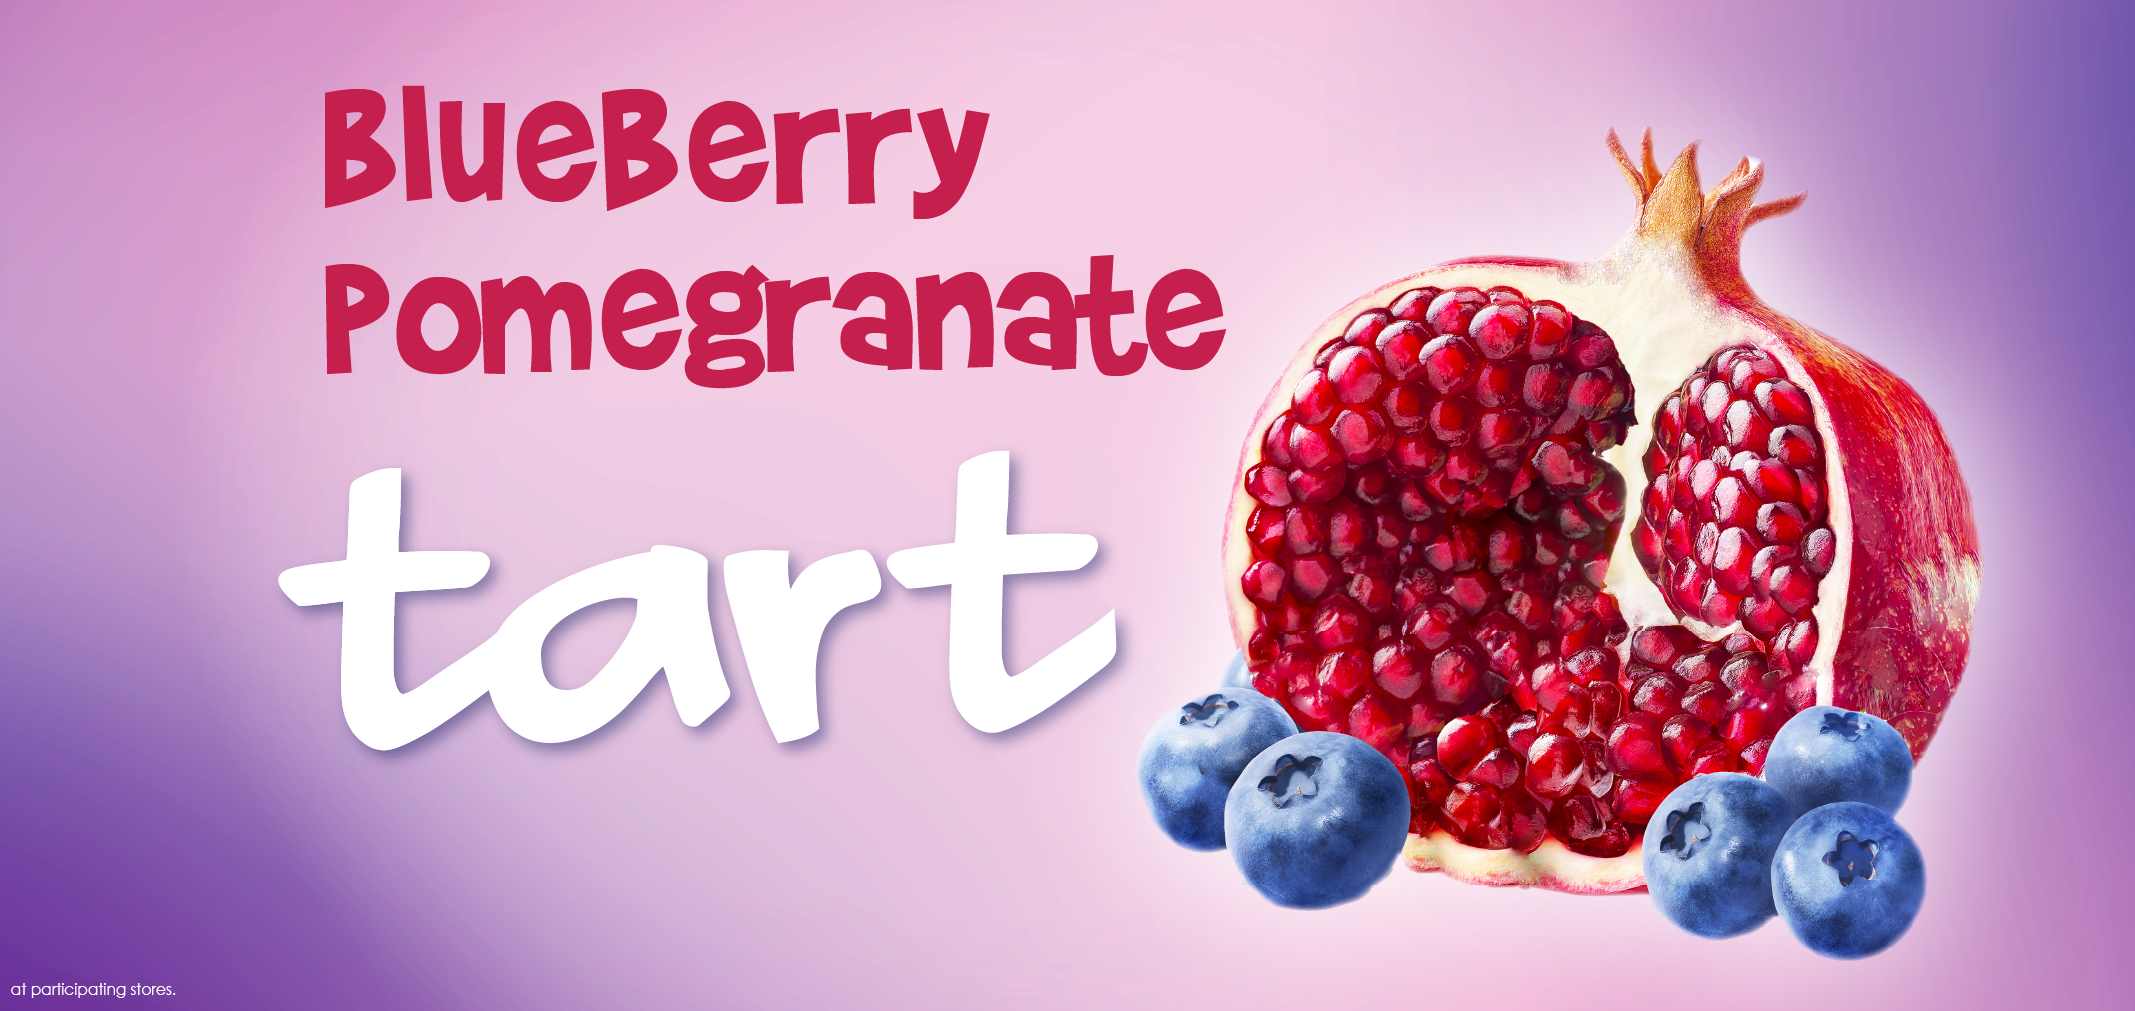 blueberry pomegranate tart label image